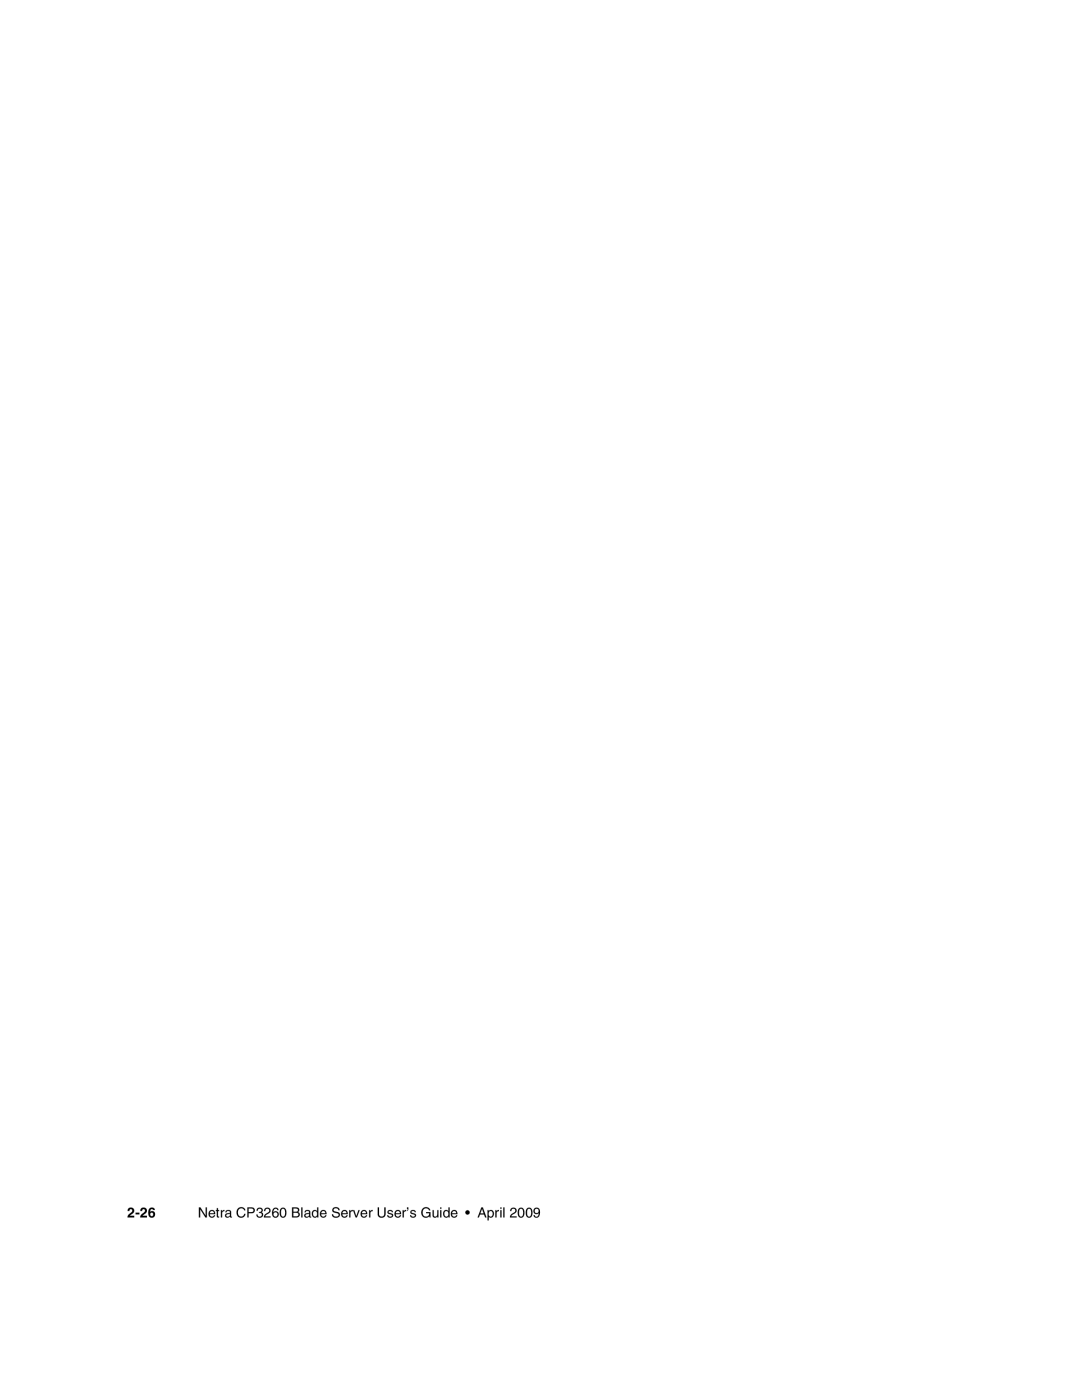 Sun Microsystems manual Netra CP3260 Blade Server User’s Guide April 